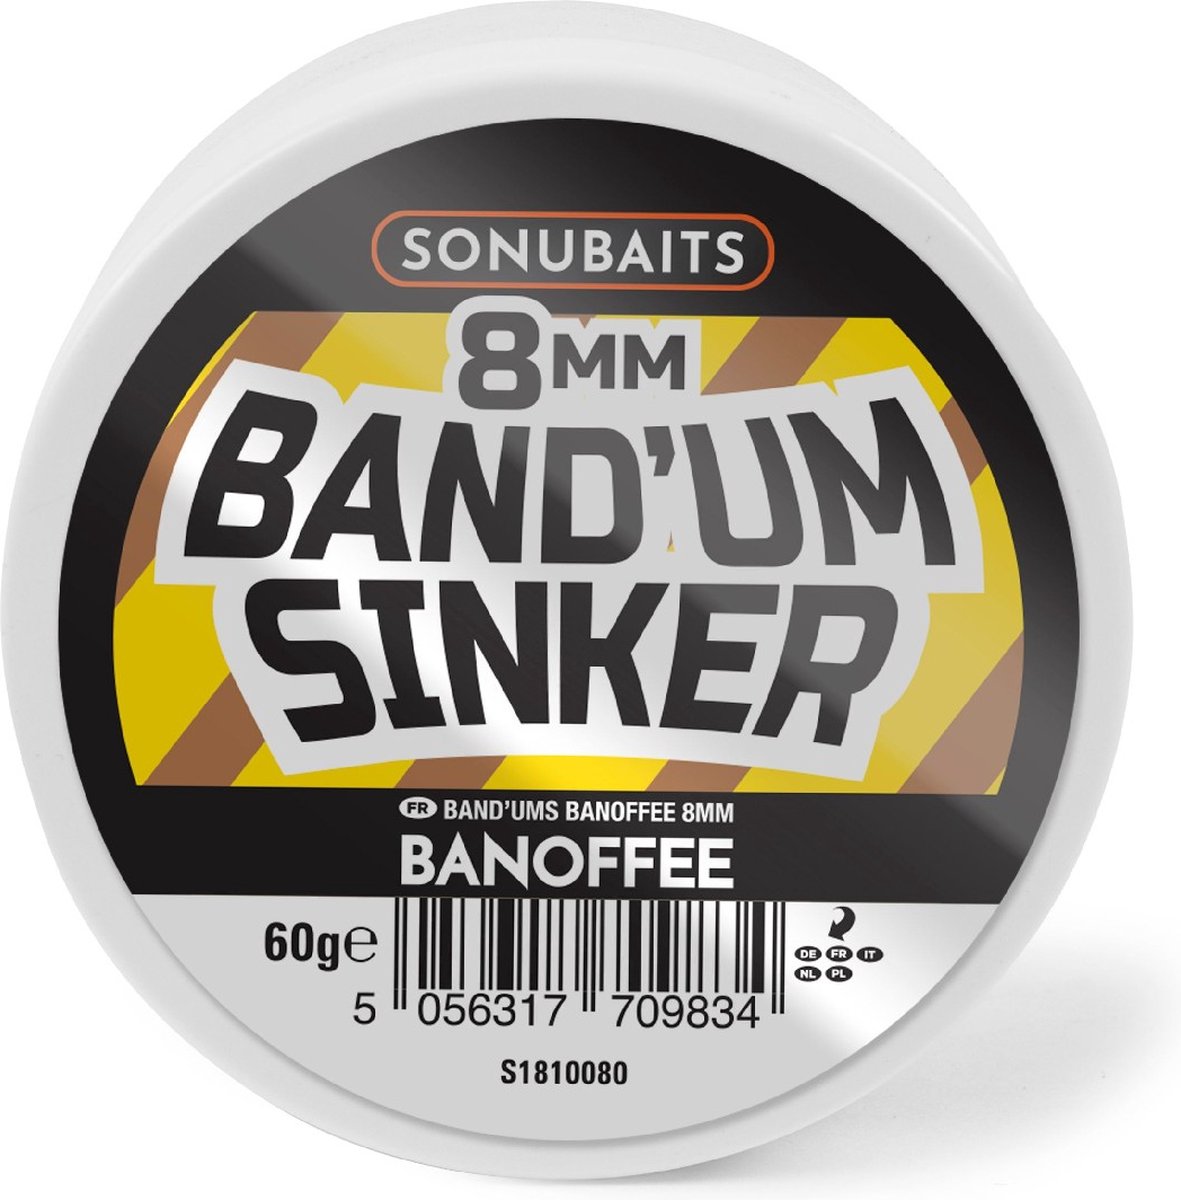 Sonubaits Bandum Sinker Banoffee 6mm | Boilies